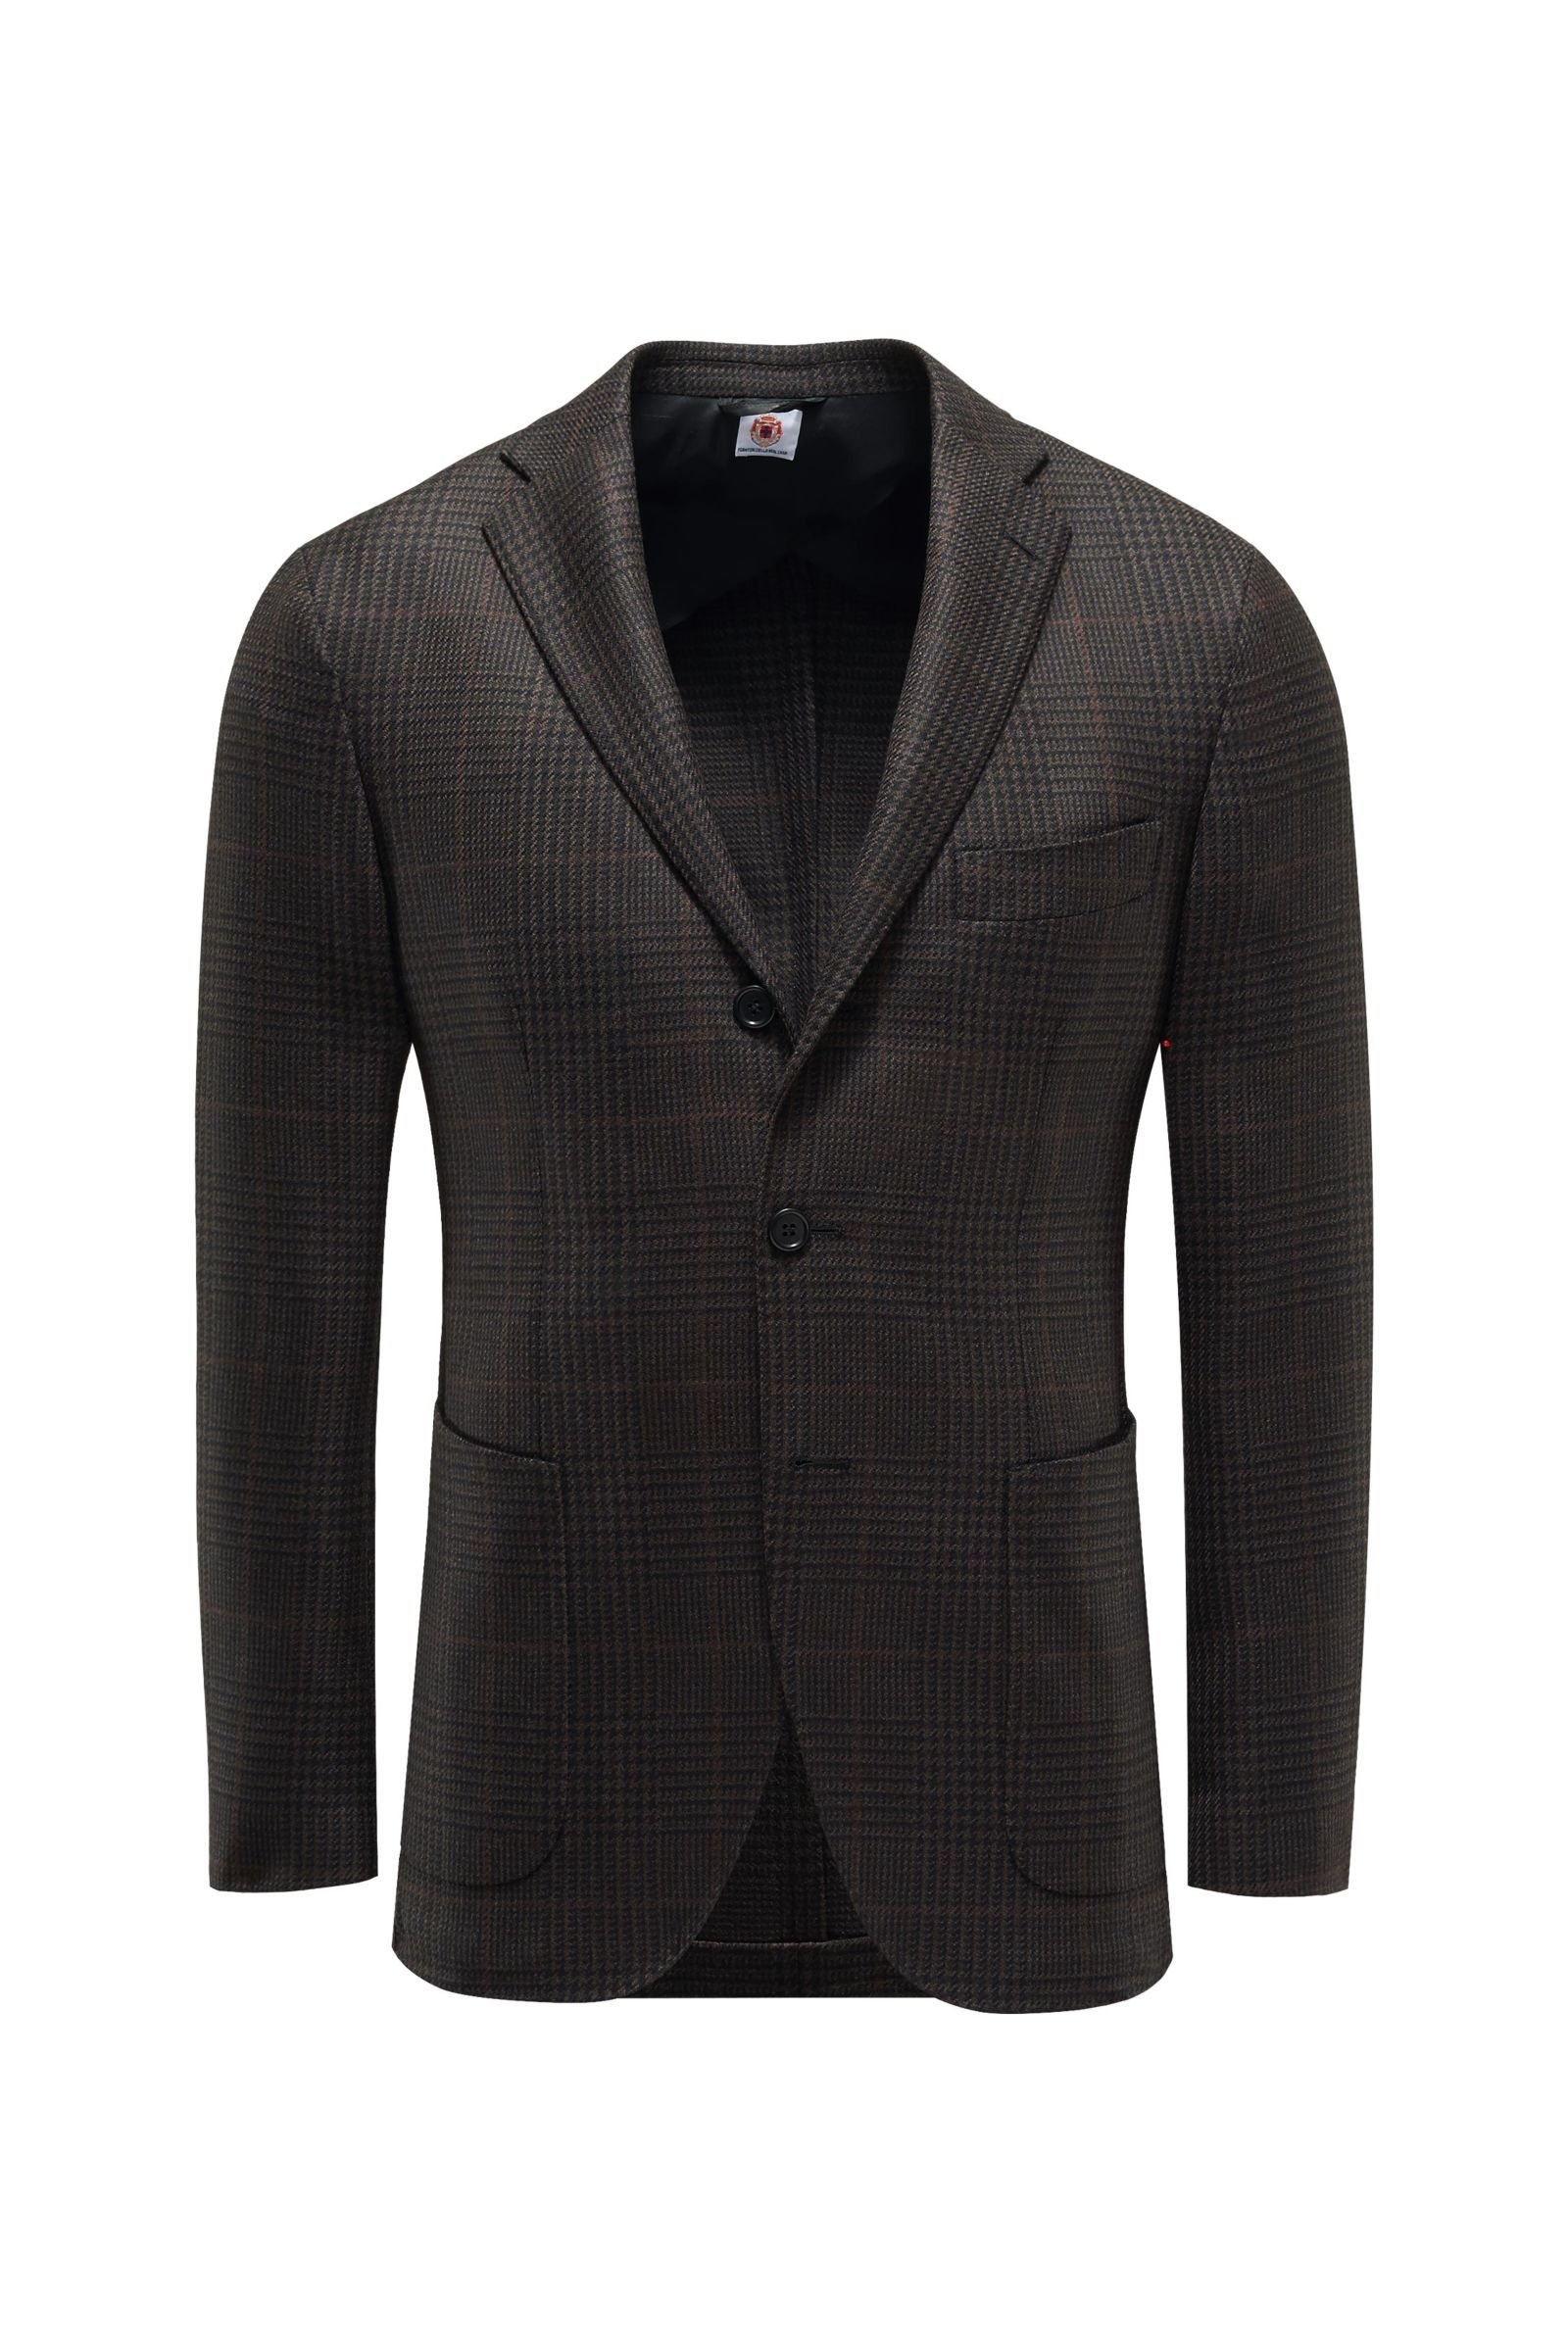 Smart-casual jacket 'Sorrento' dark brown checked